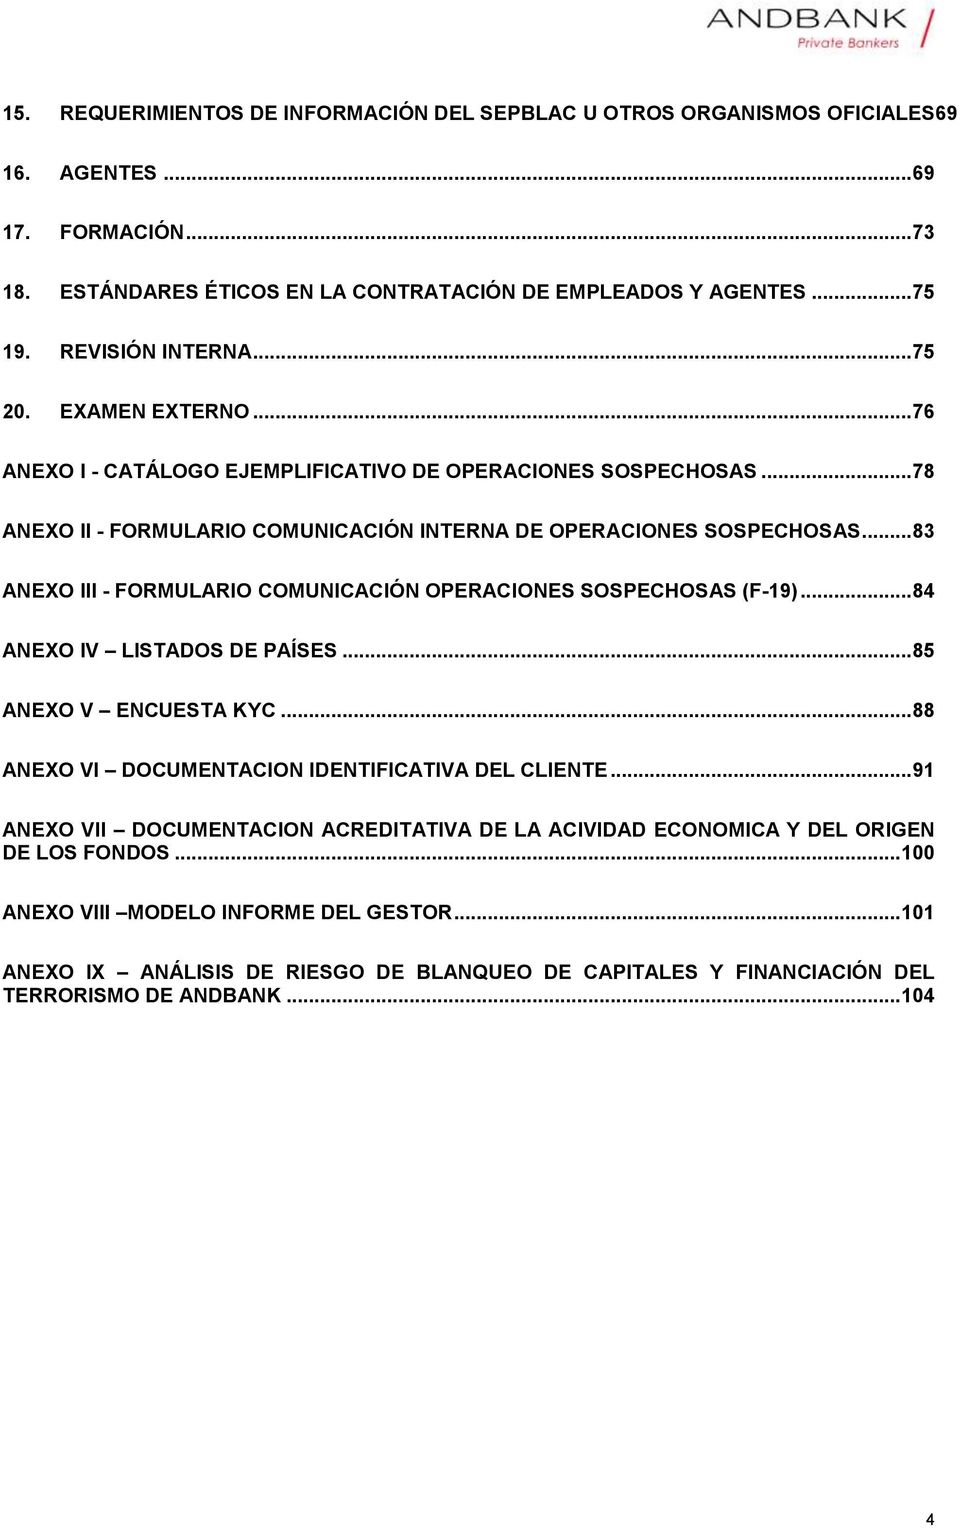 .. 83 ANEXO III - FORMULARIO COMUNICACIÓN OPERACIONES SOSPECHOSAS (F-19)... 84 ANEXO IV LISTADOS DE PAÍSES... 85 ANEXO V ENCUESTA KYC... 88 ANEXO VI DOCUMENTACION IDENTIFICATIVA DEL CLIENTE.